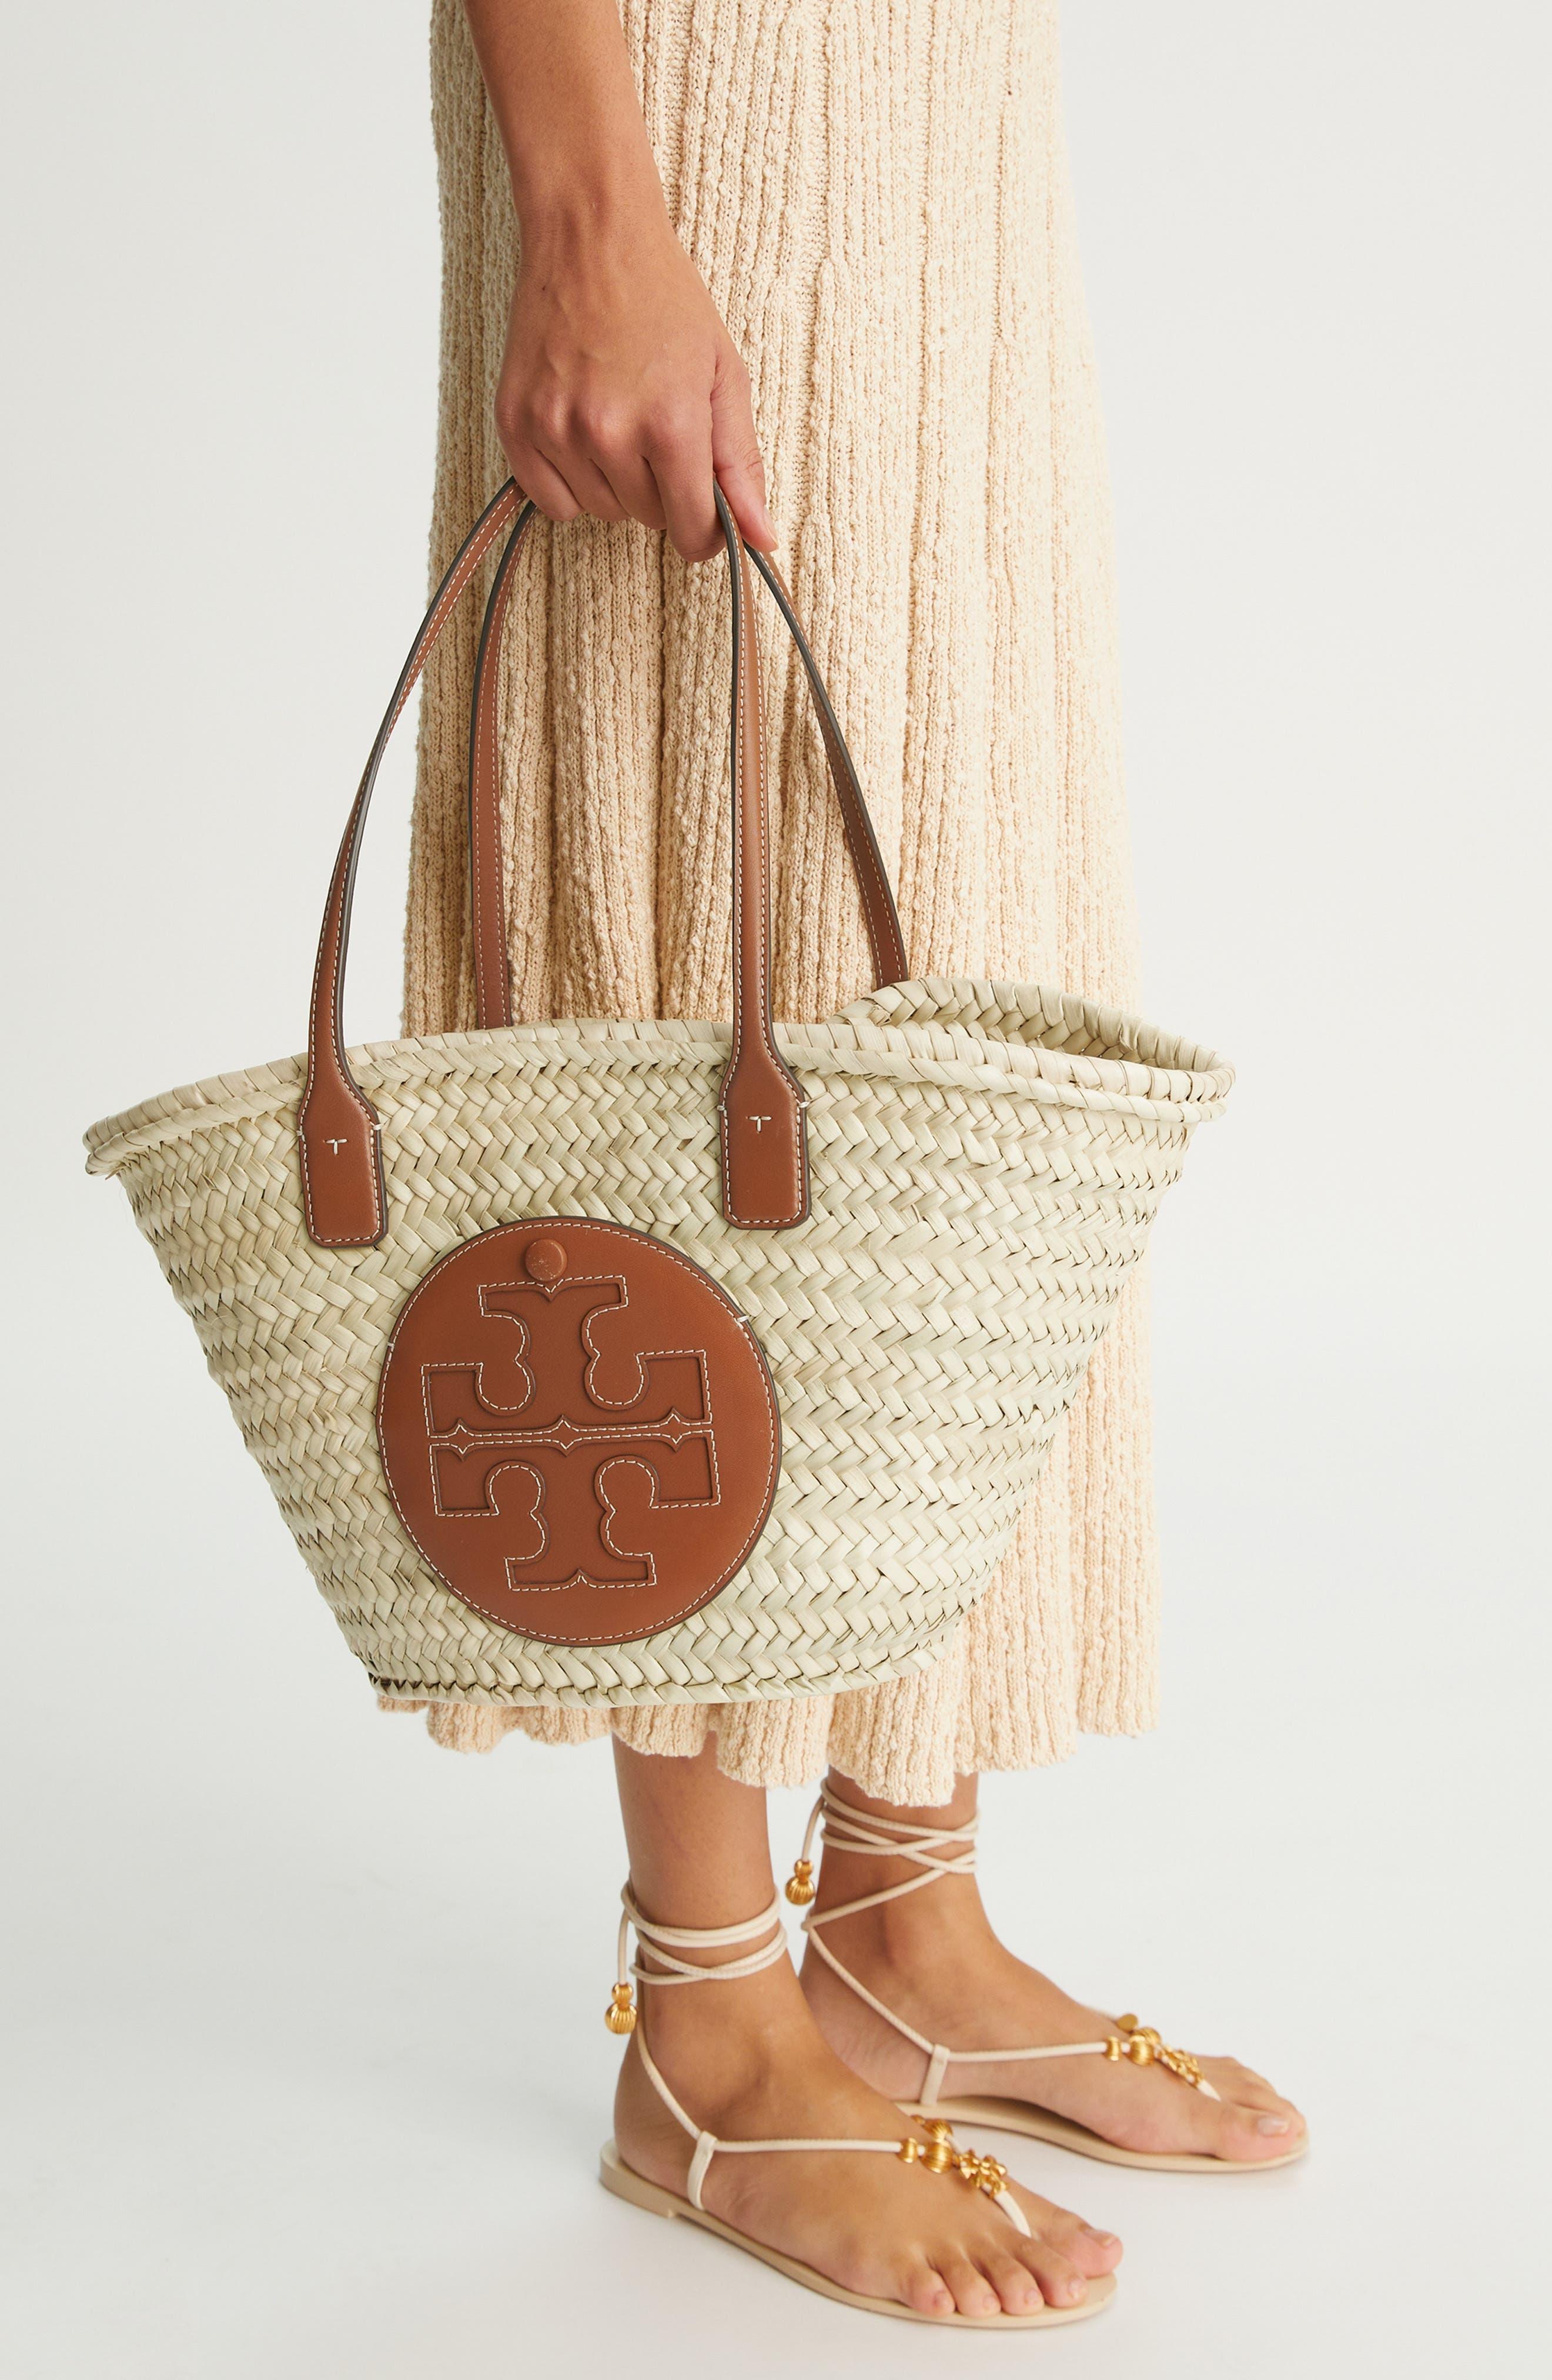 Neiman Marcus Tory Burch Ella Straw Basket Tote Bag w/ Floral